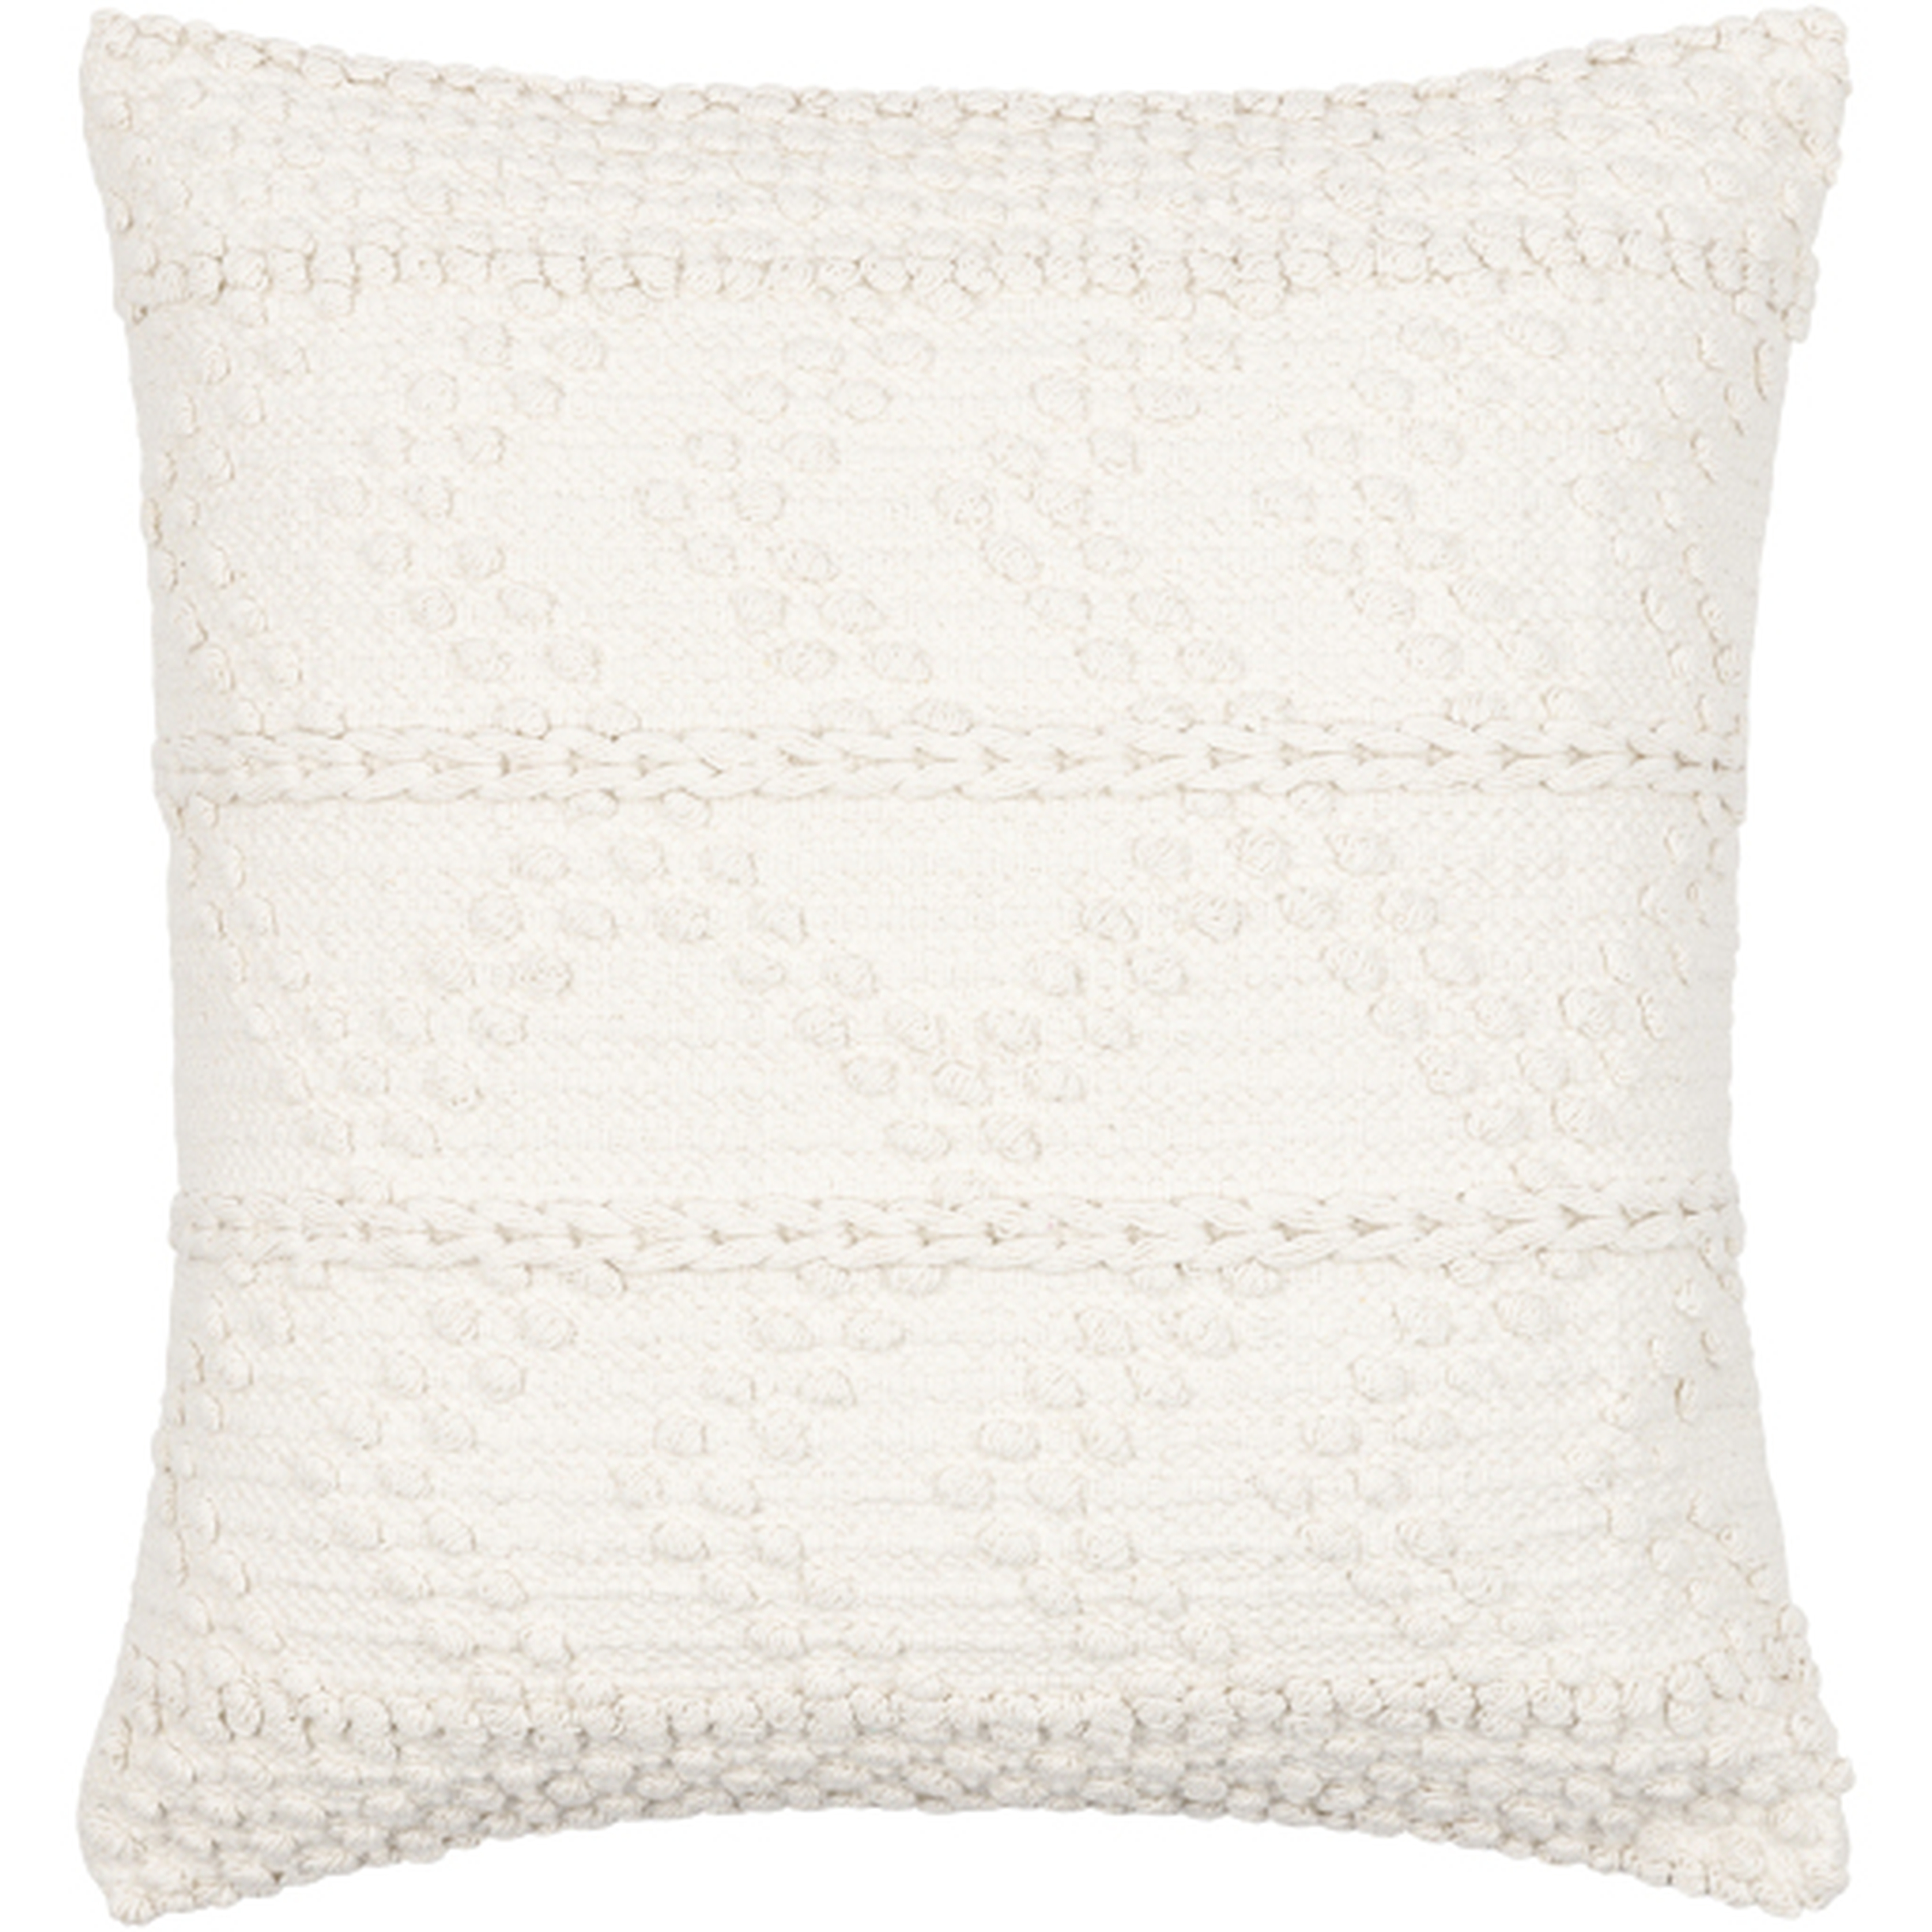 Merdo Throw Pillow, 22" x 22", pillow cover only - Surya